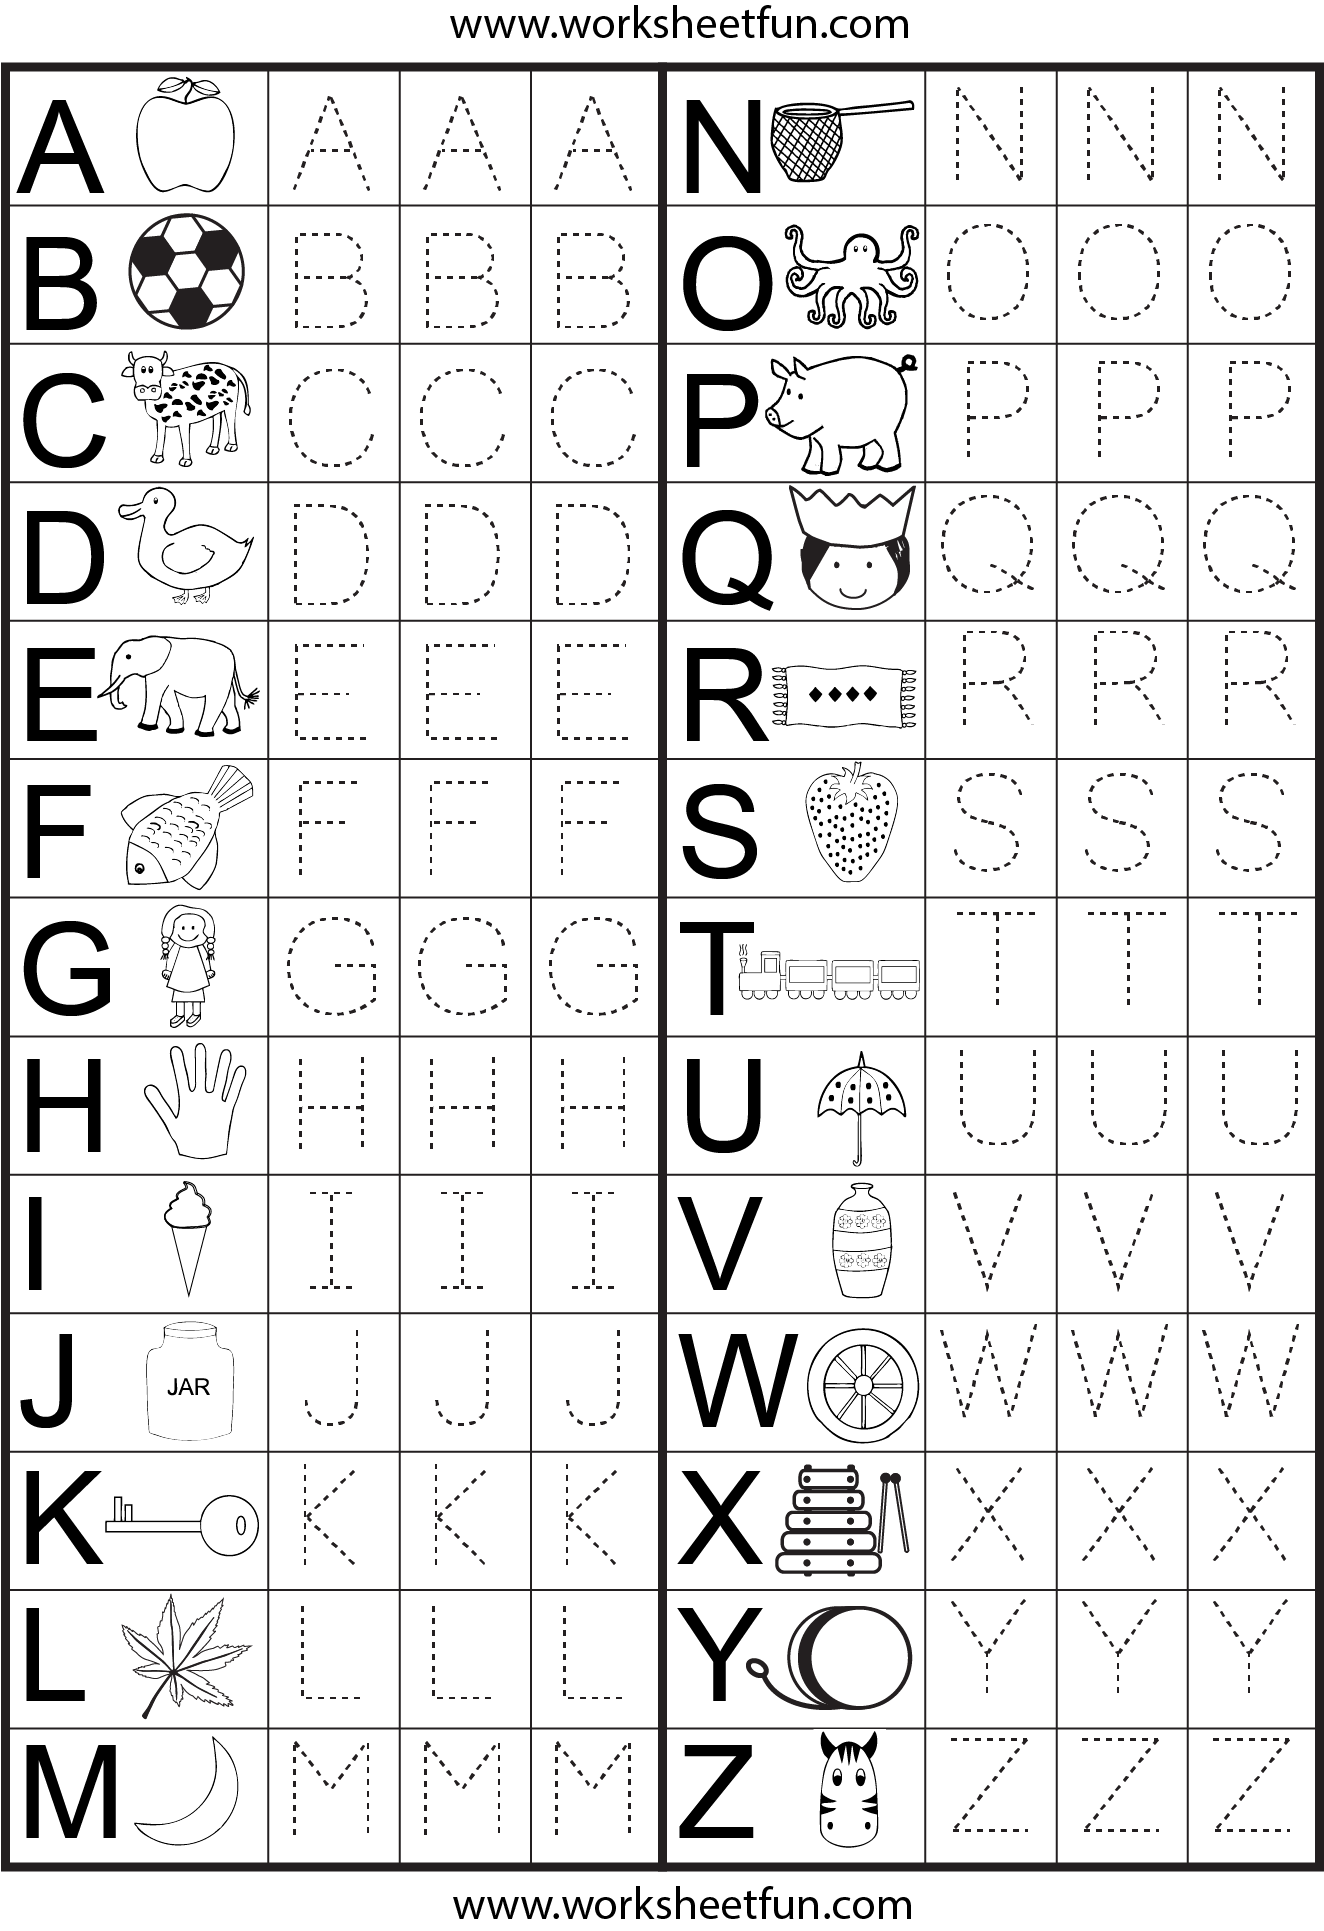 Free Printable Alphabet Worksheets For Grade 1 Fanny Printable